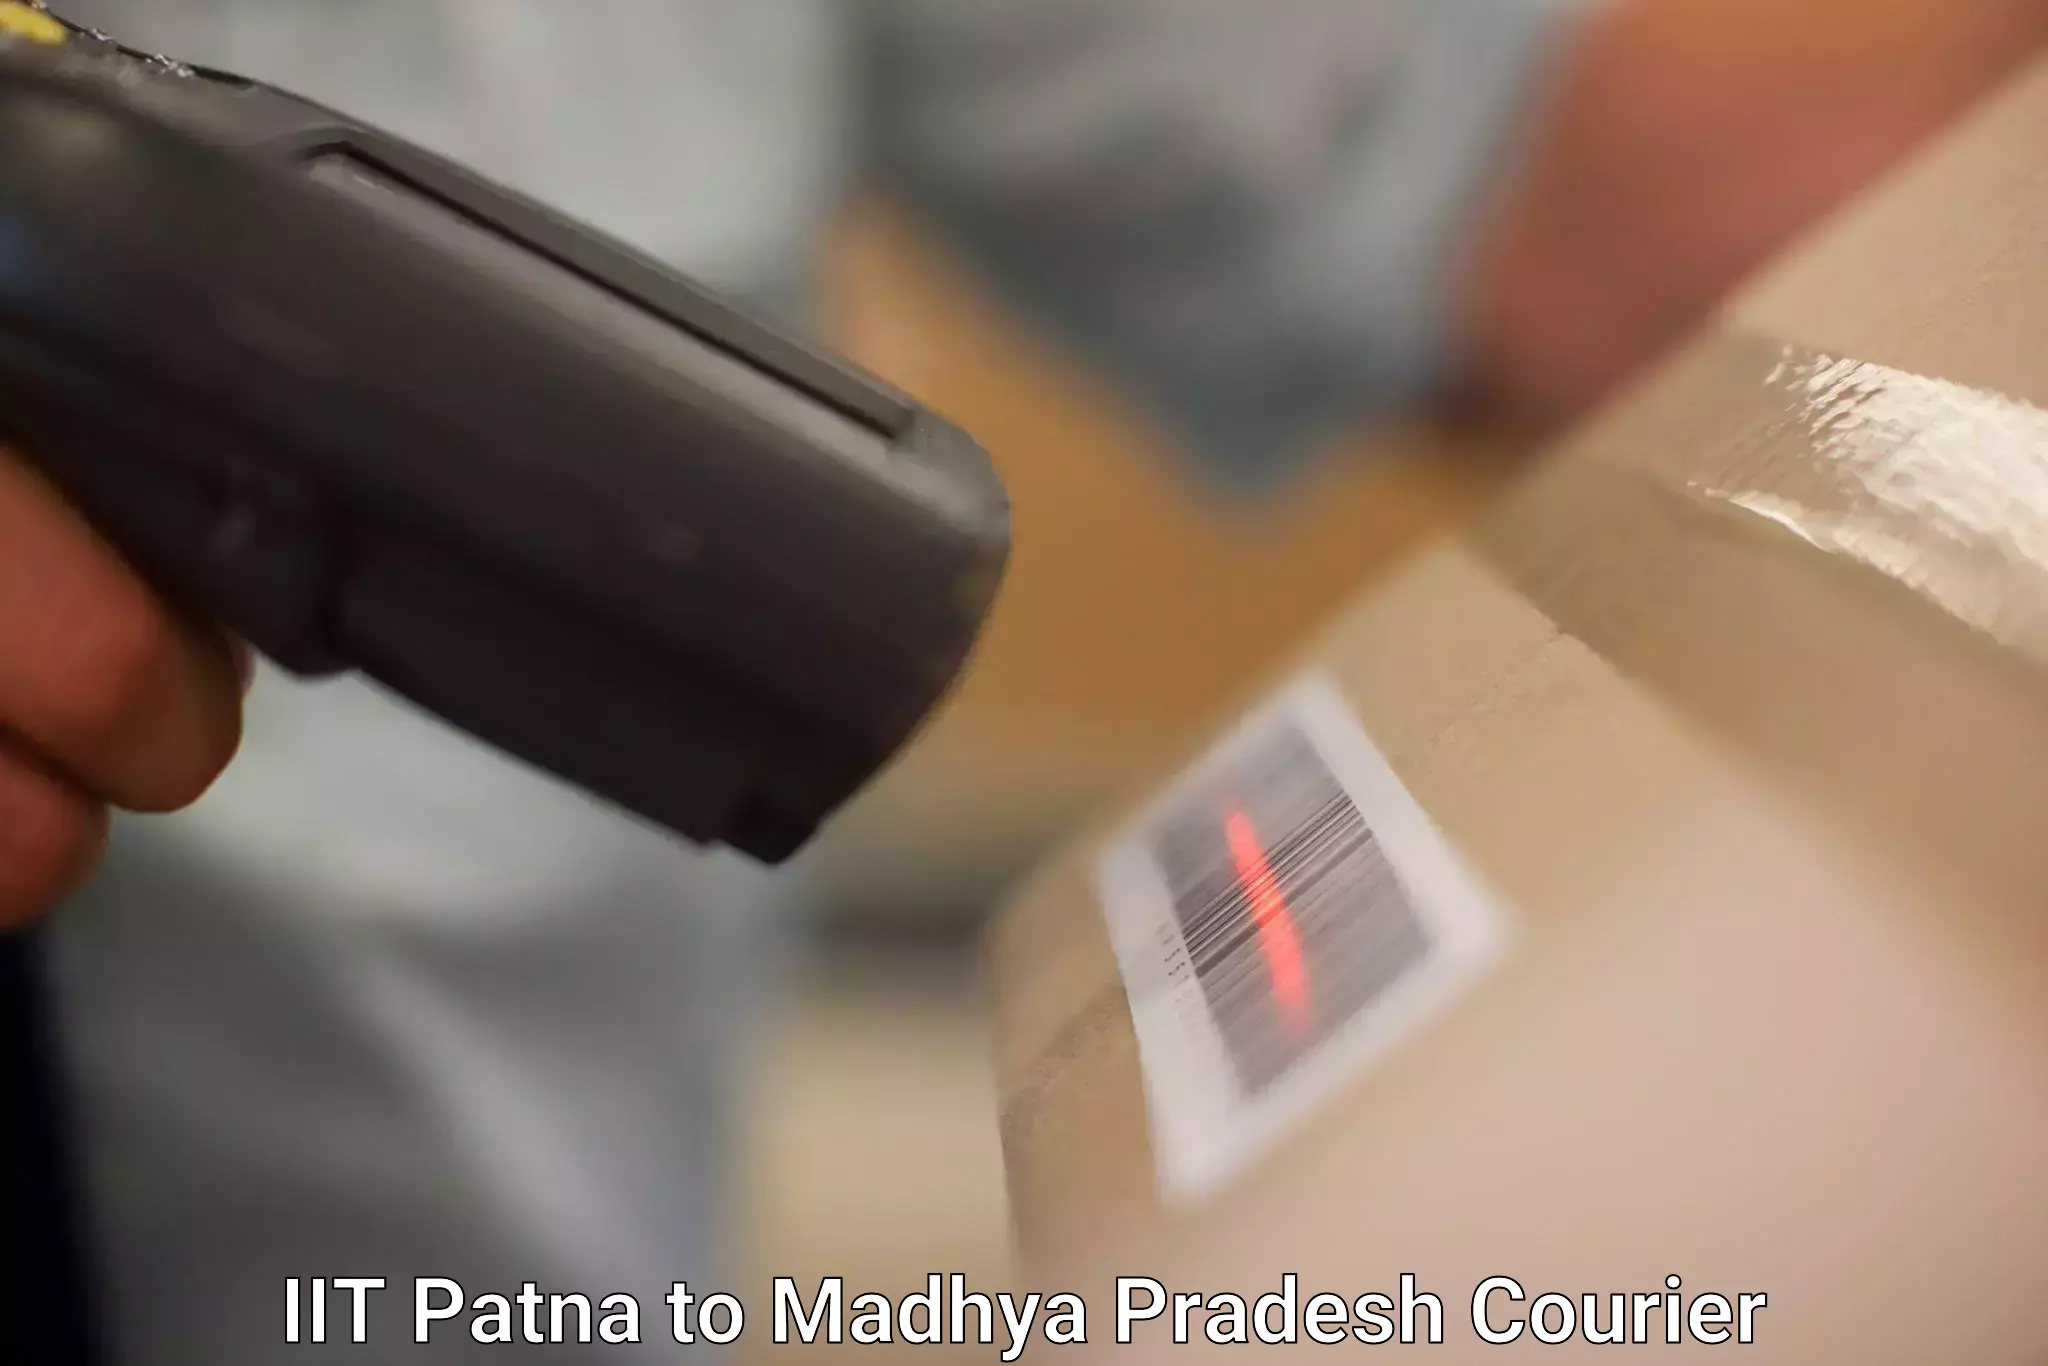 Courier service partnerships IIT Patna to Sendhwa